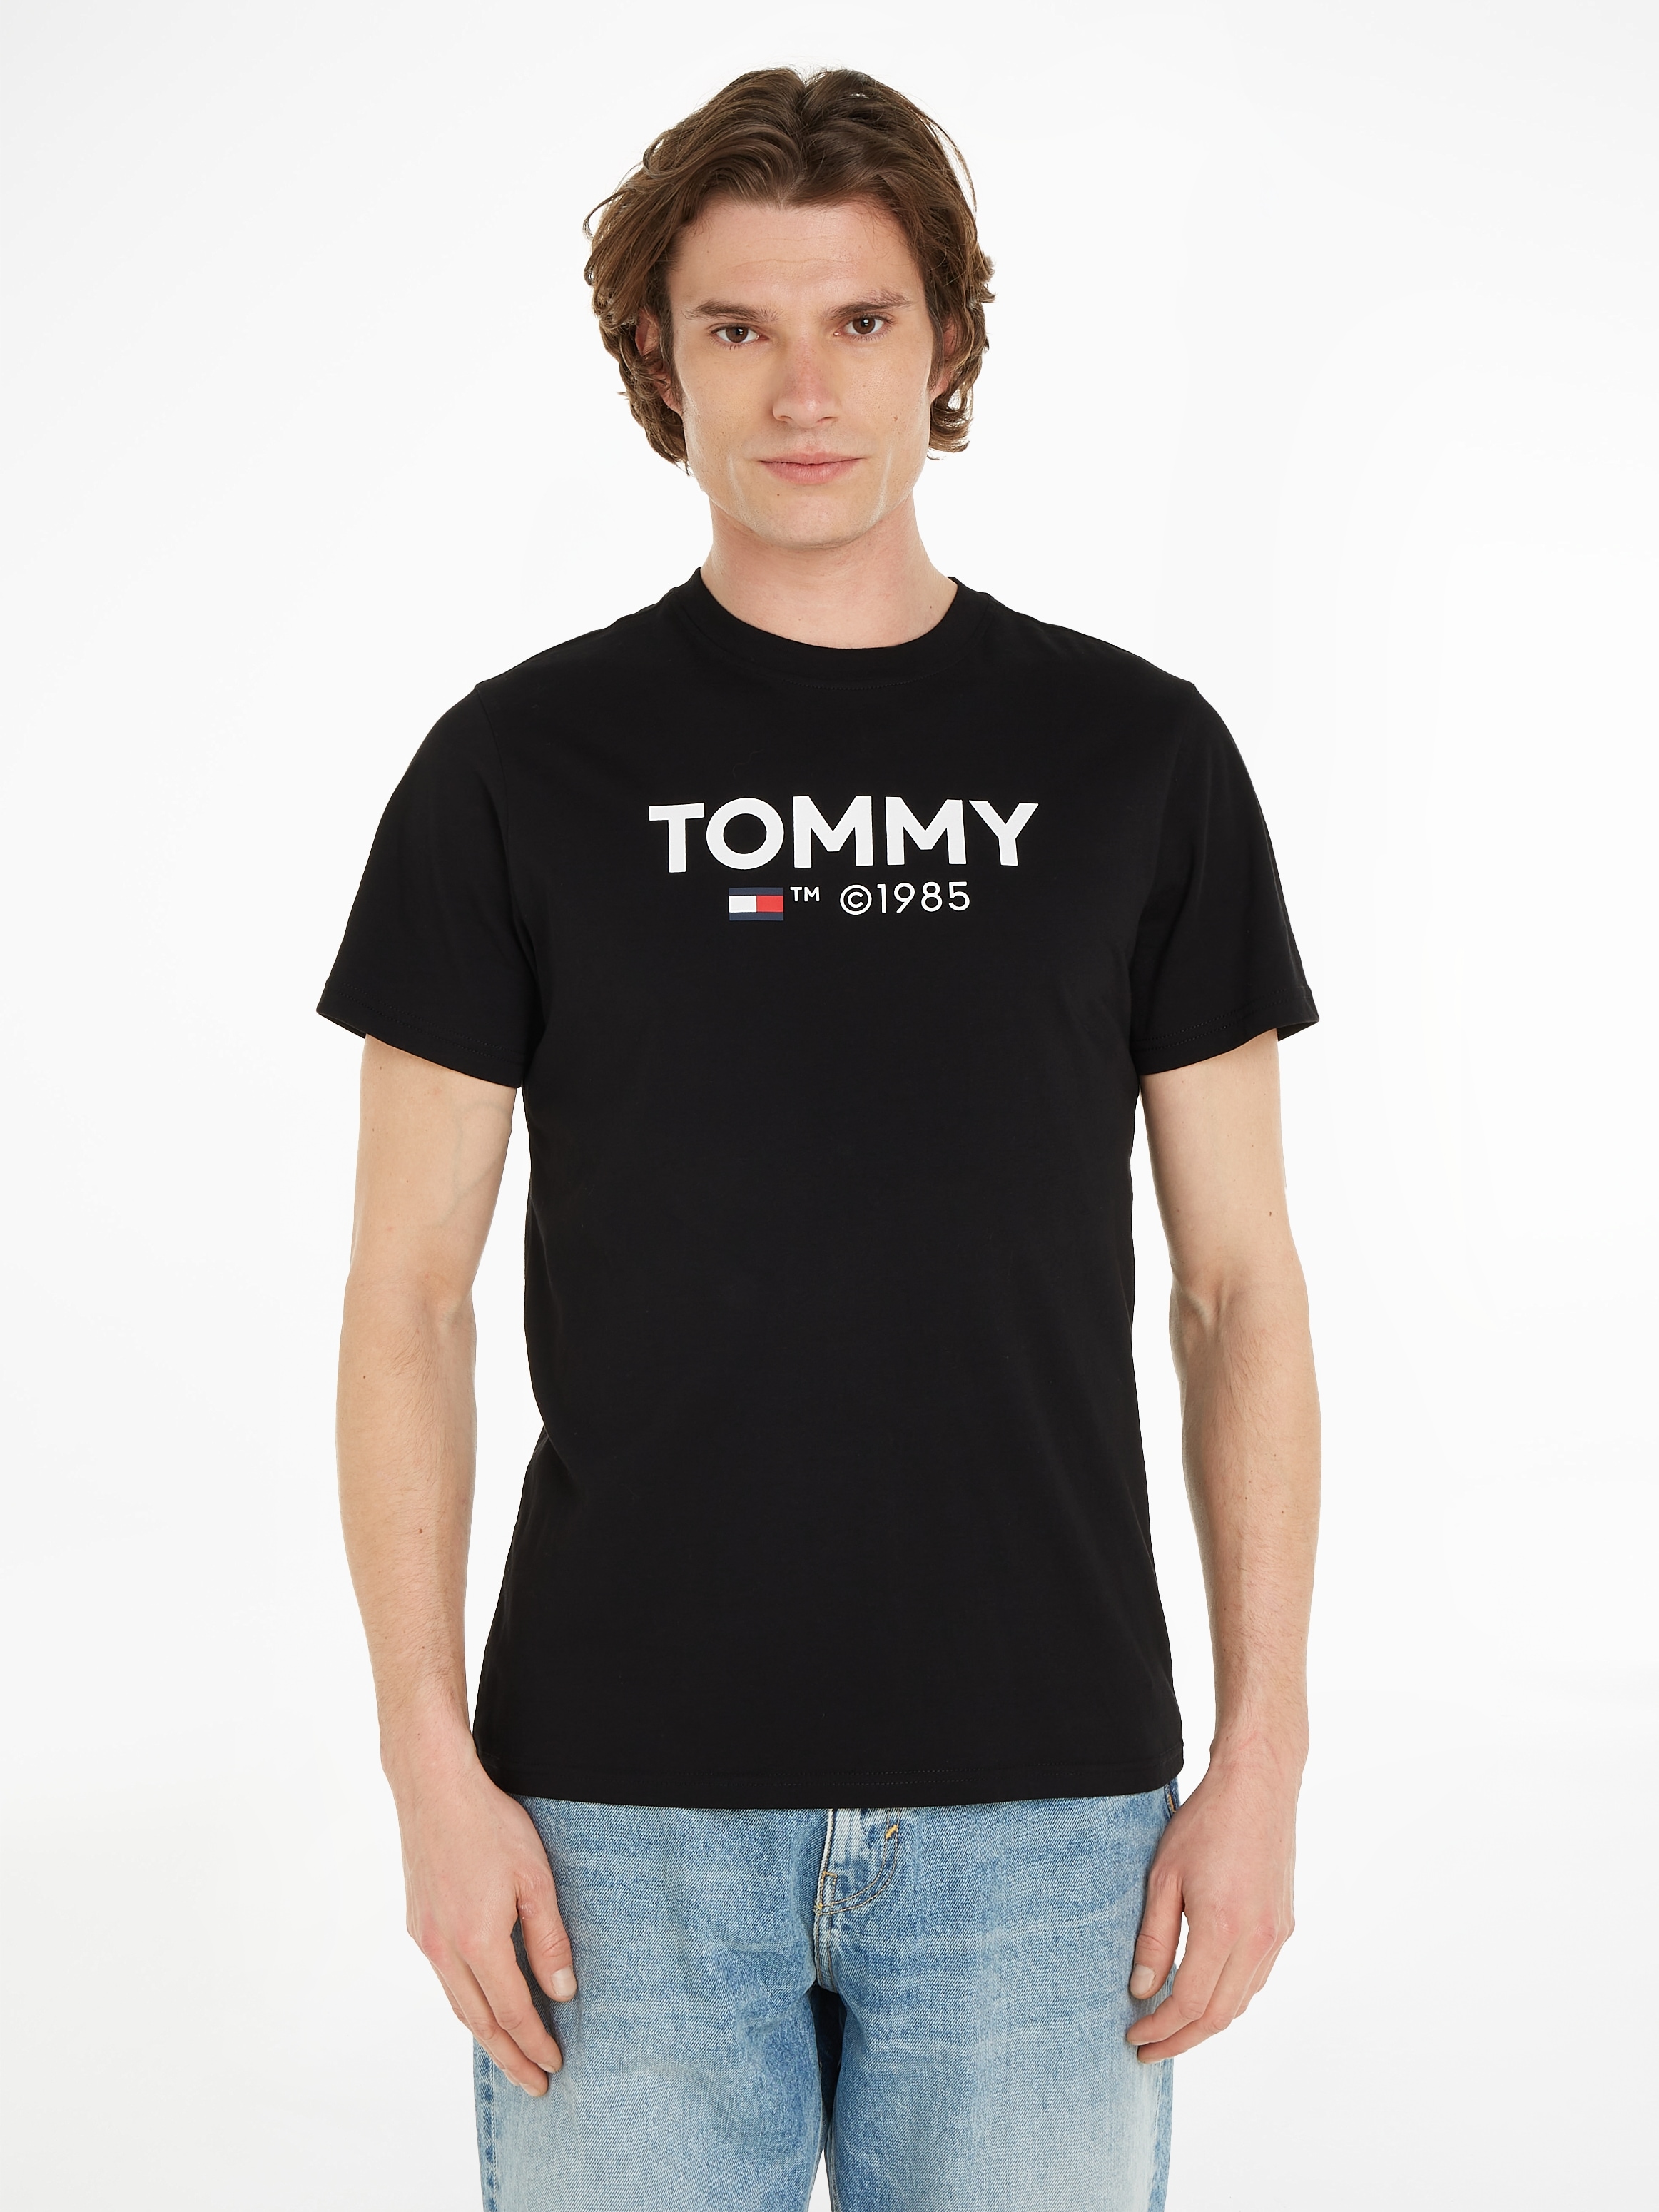 Tommy Jeans Hilfiger T-Shirt bei großem SLIM Tommy Brust auf TOMMY DNA 2PACK Druck TEE«, S/S »TJM mit ♕ der